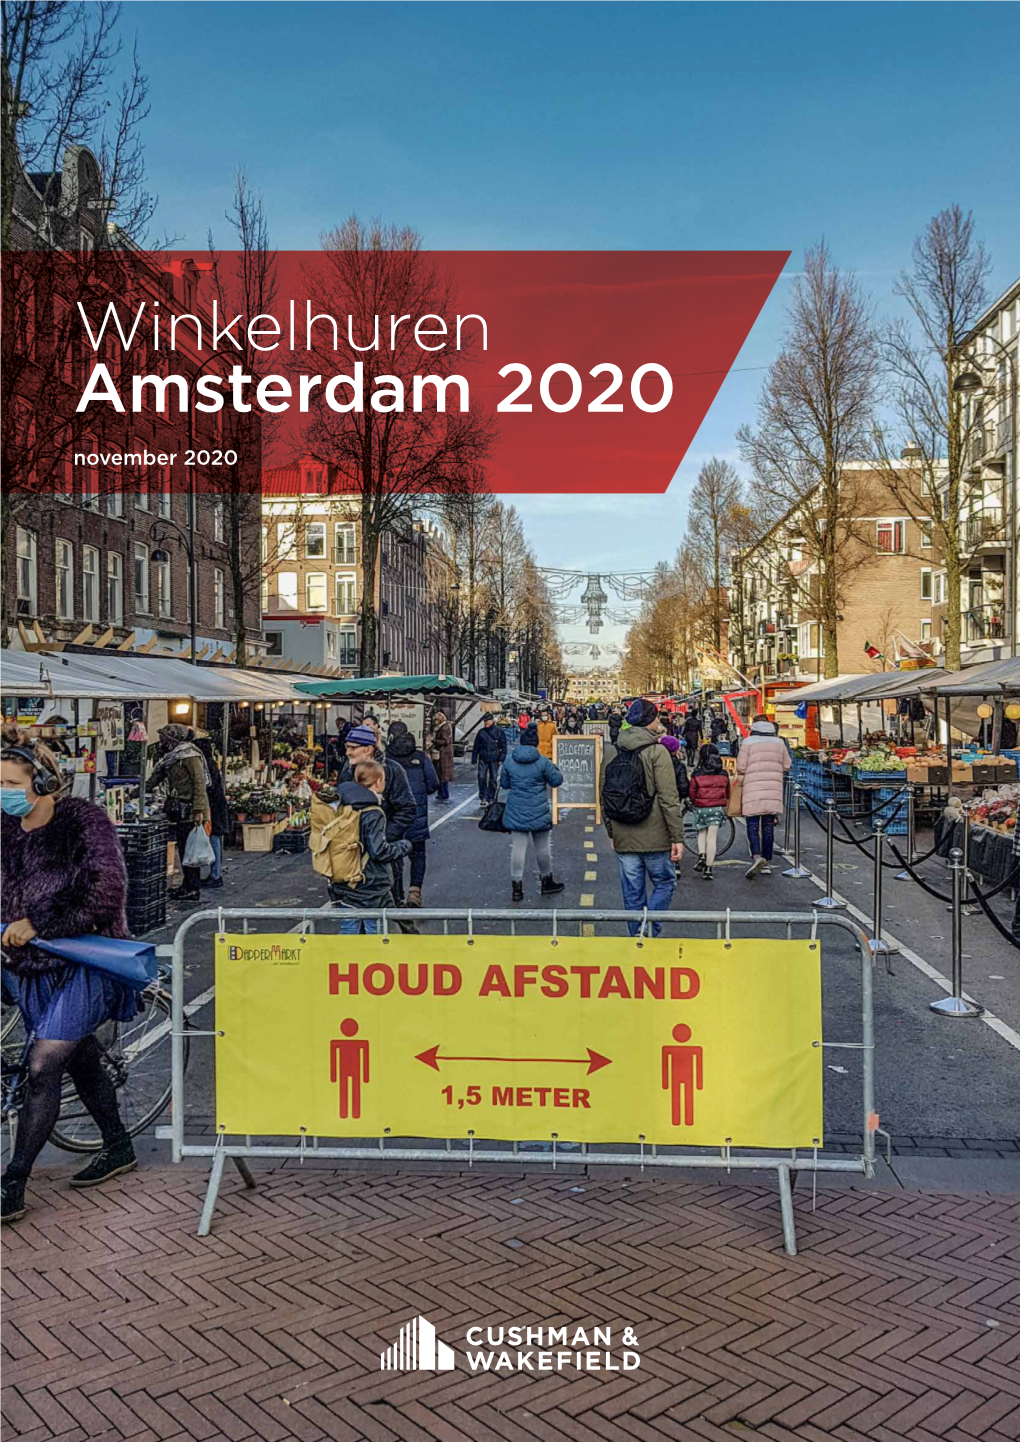 Winkelhuren Amsterdam 2020 November 2020 2 CUSHMAN & WAKEFIELD